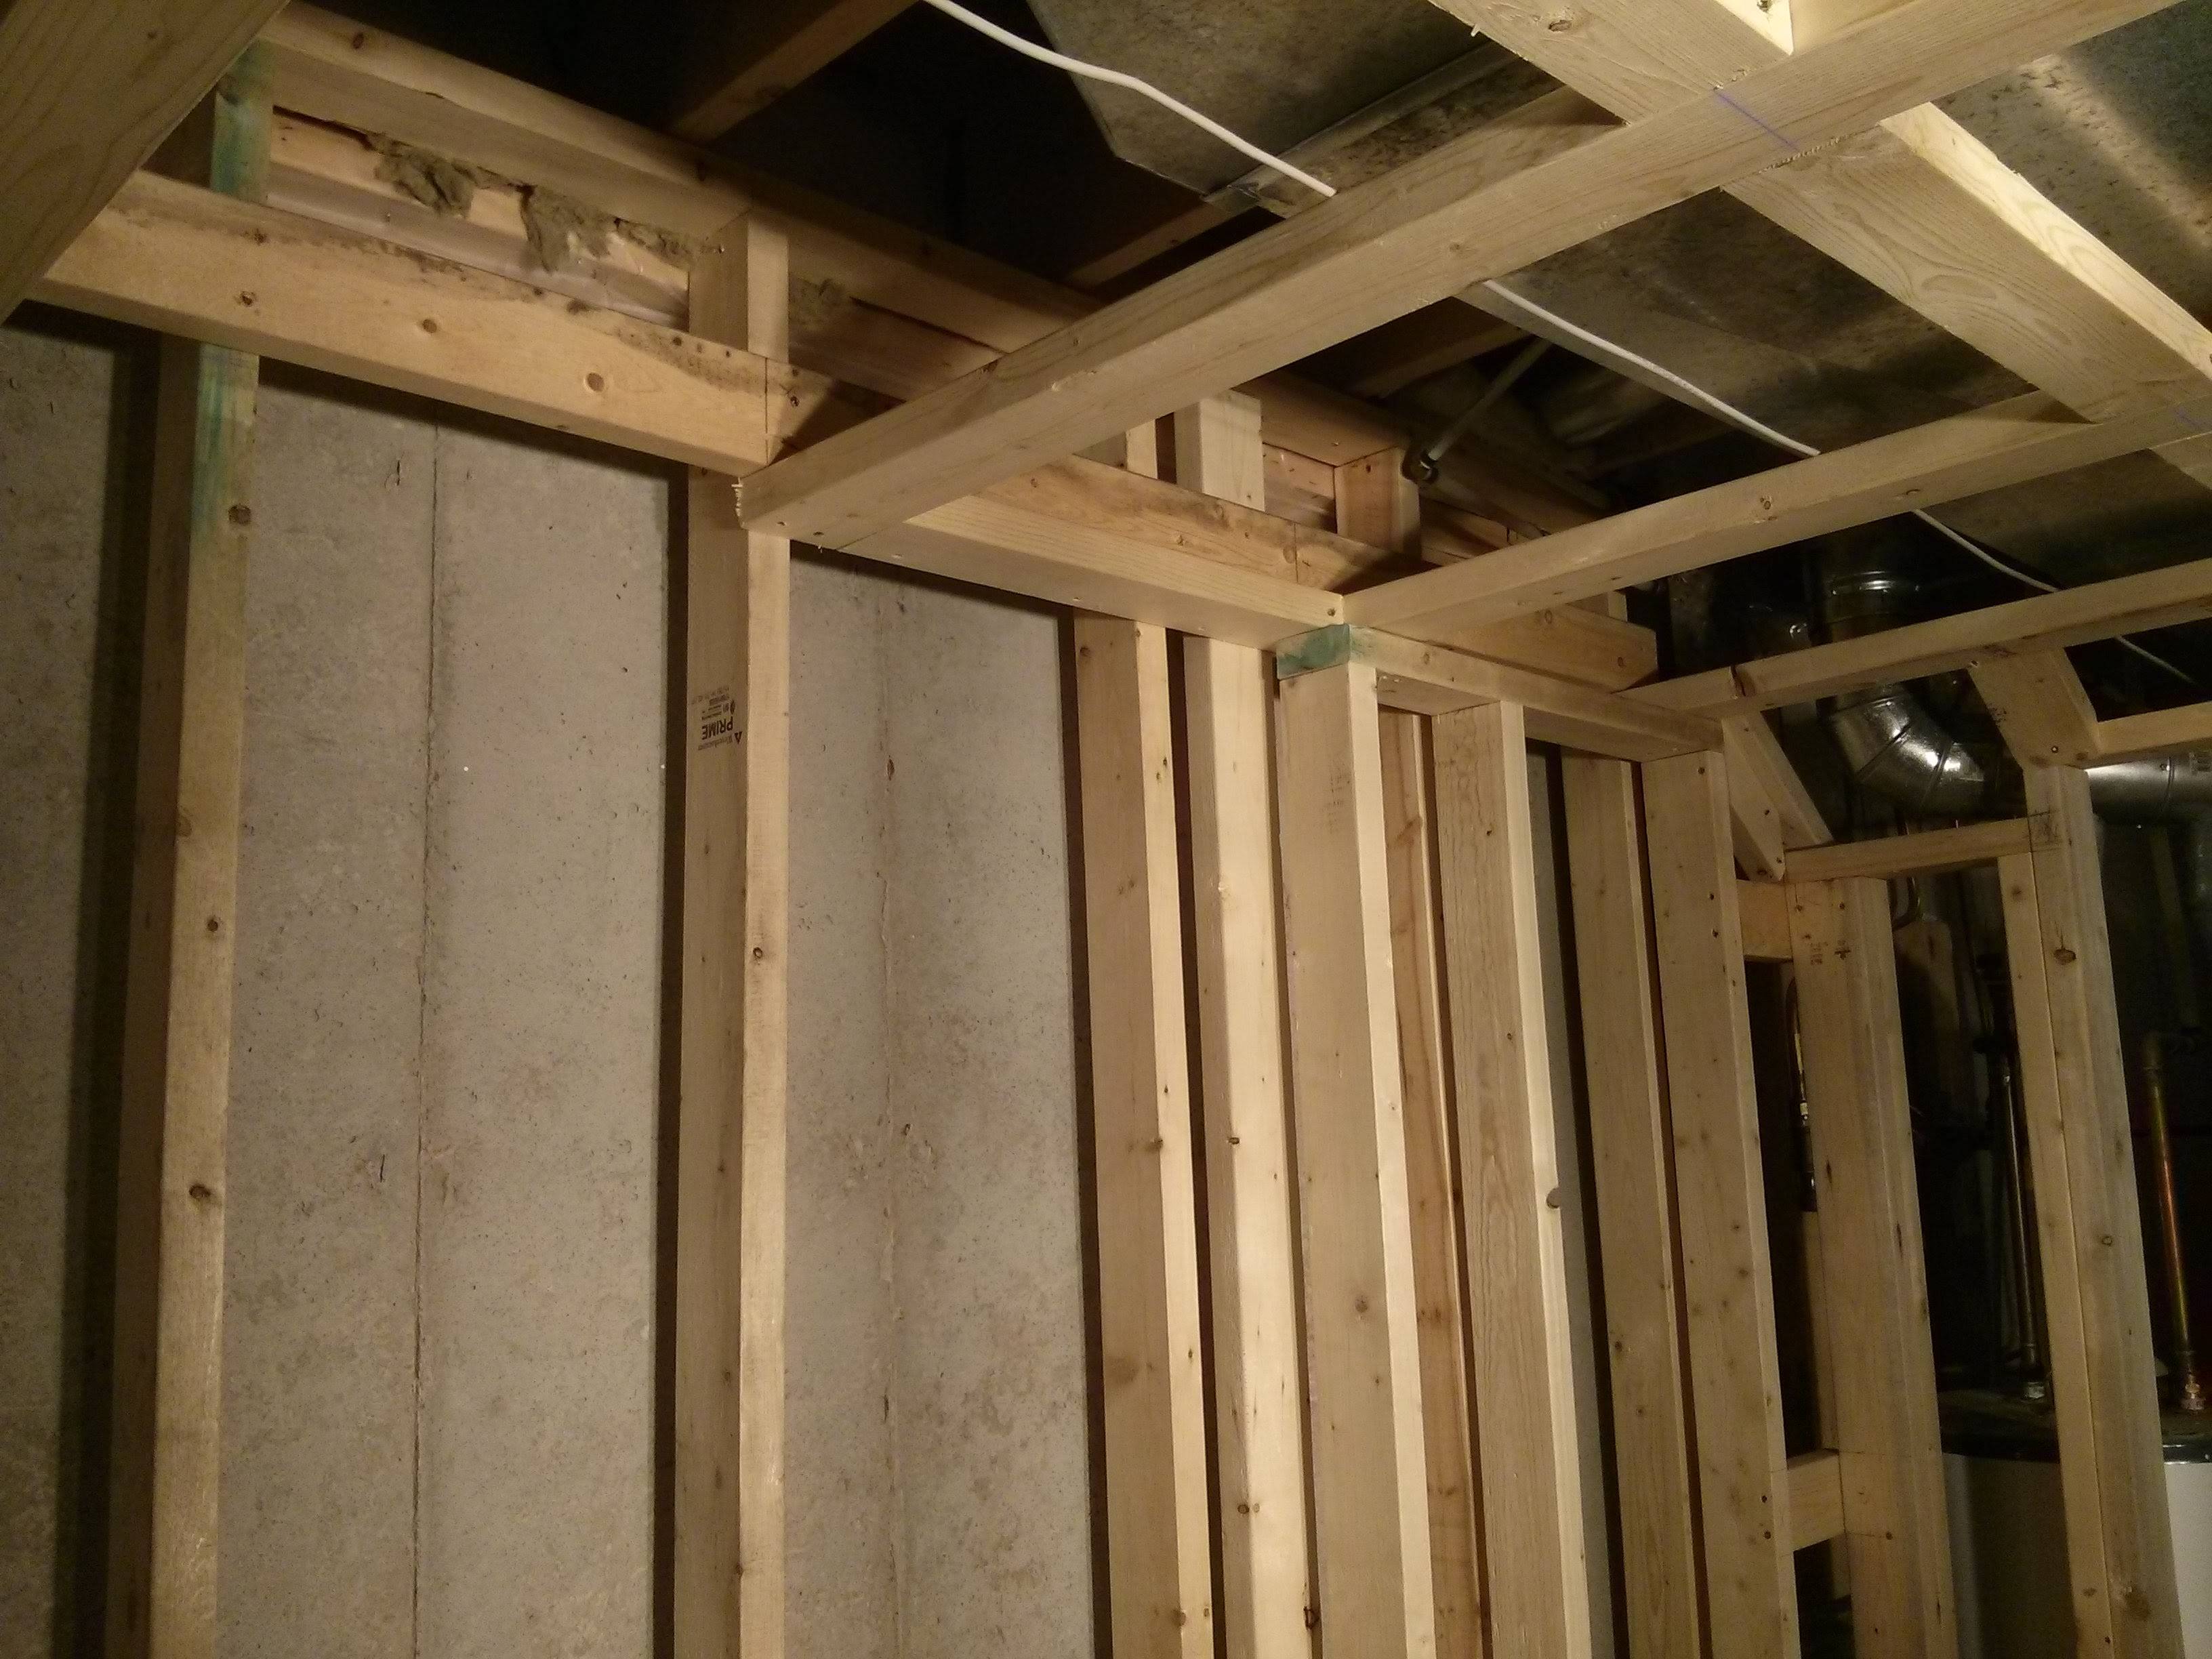 insulation - Vapor barrier problems - Home Improvement Stack Exchange